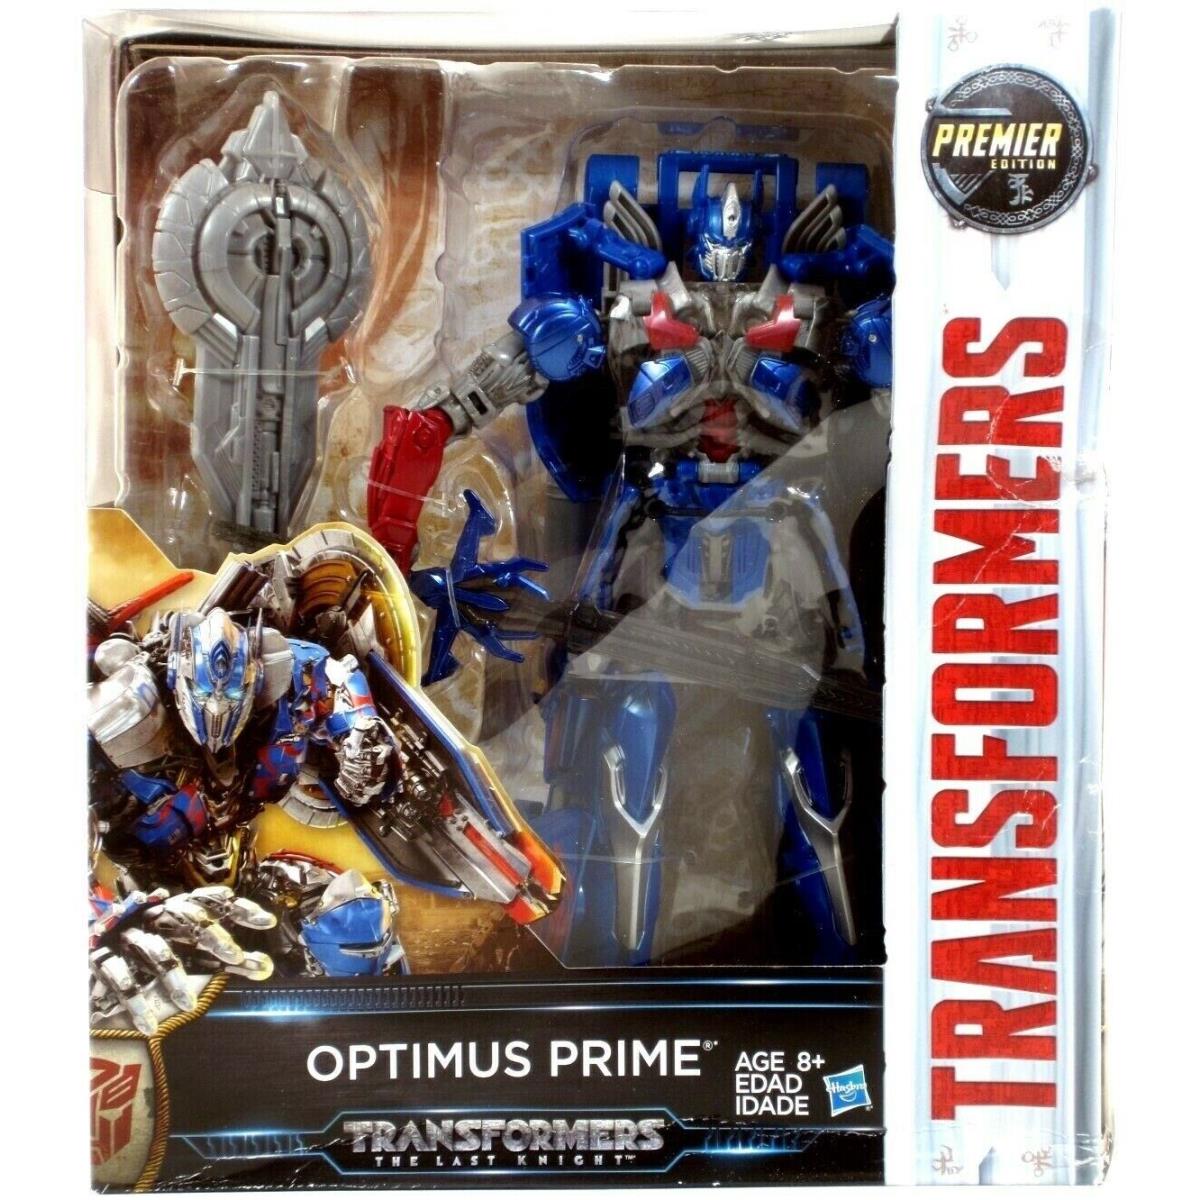 Pkg Transformer Last Knight Optimus Prime Premier Edition Leader Class